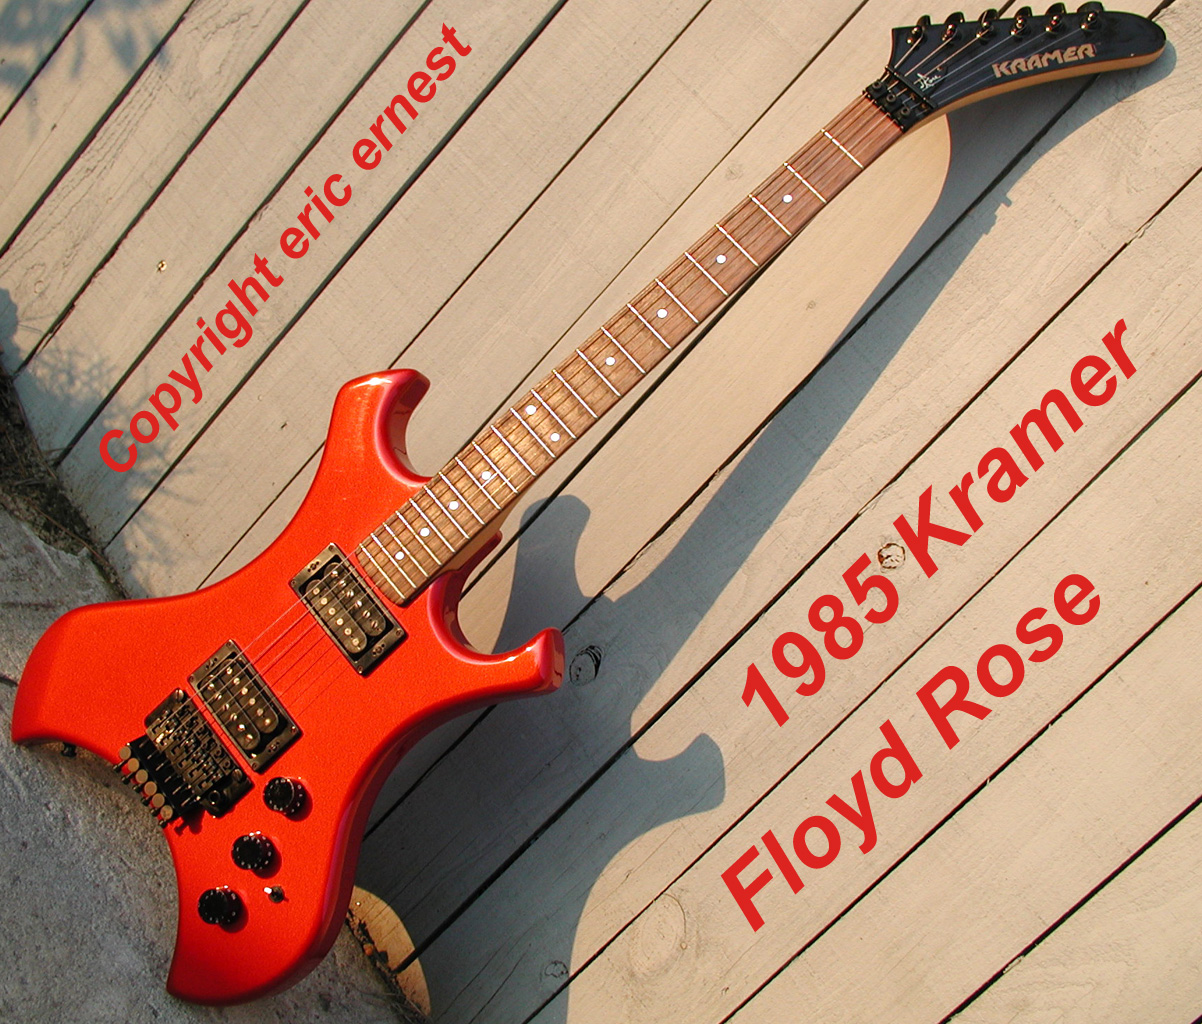 Kramer Guitar Neck American Baretta Pacer Floyd Rose Nightswan Waterslide Decal 